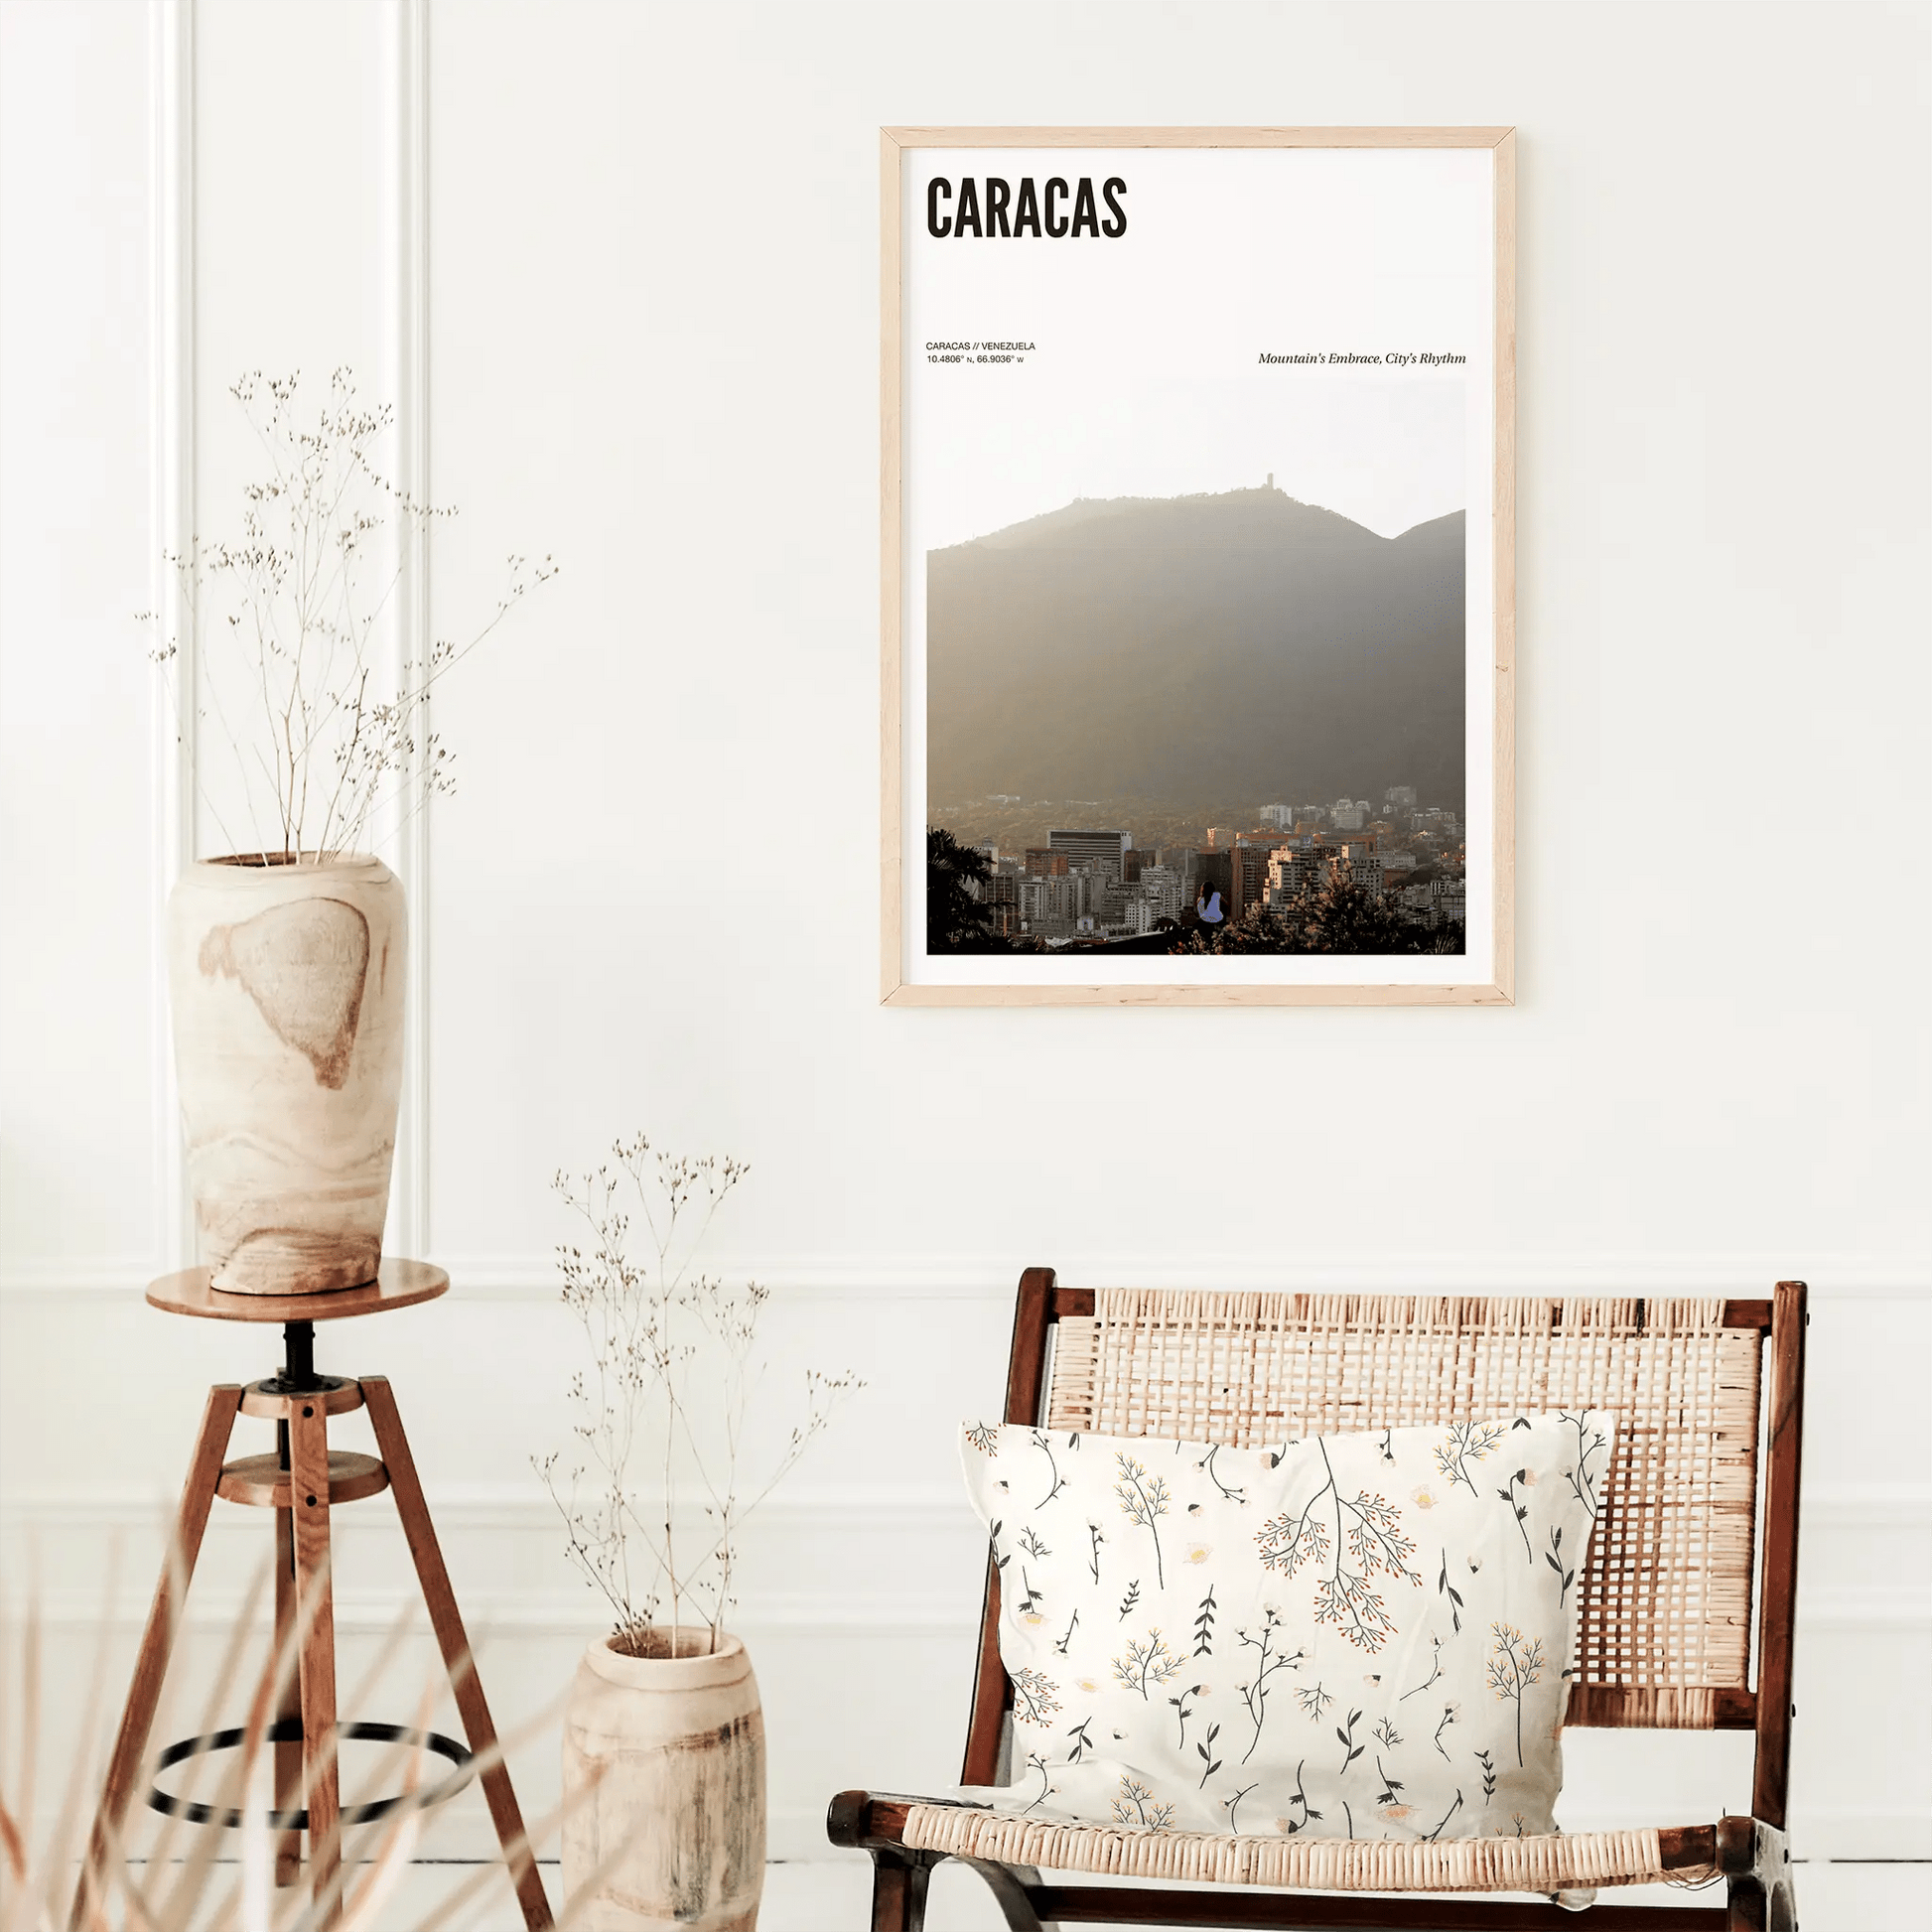 Caracas Odyssey Poster - The Globe Gallery